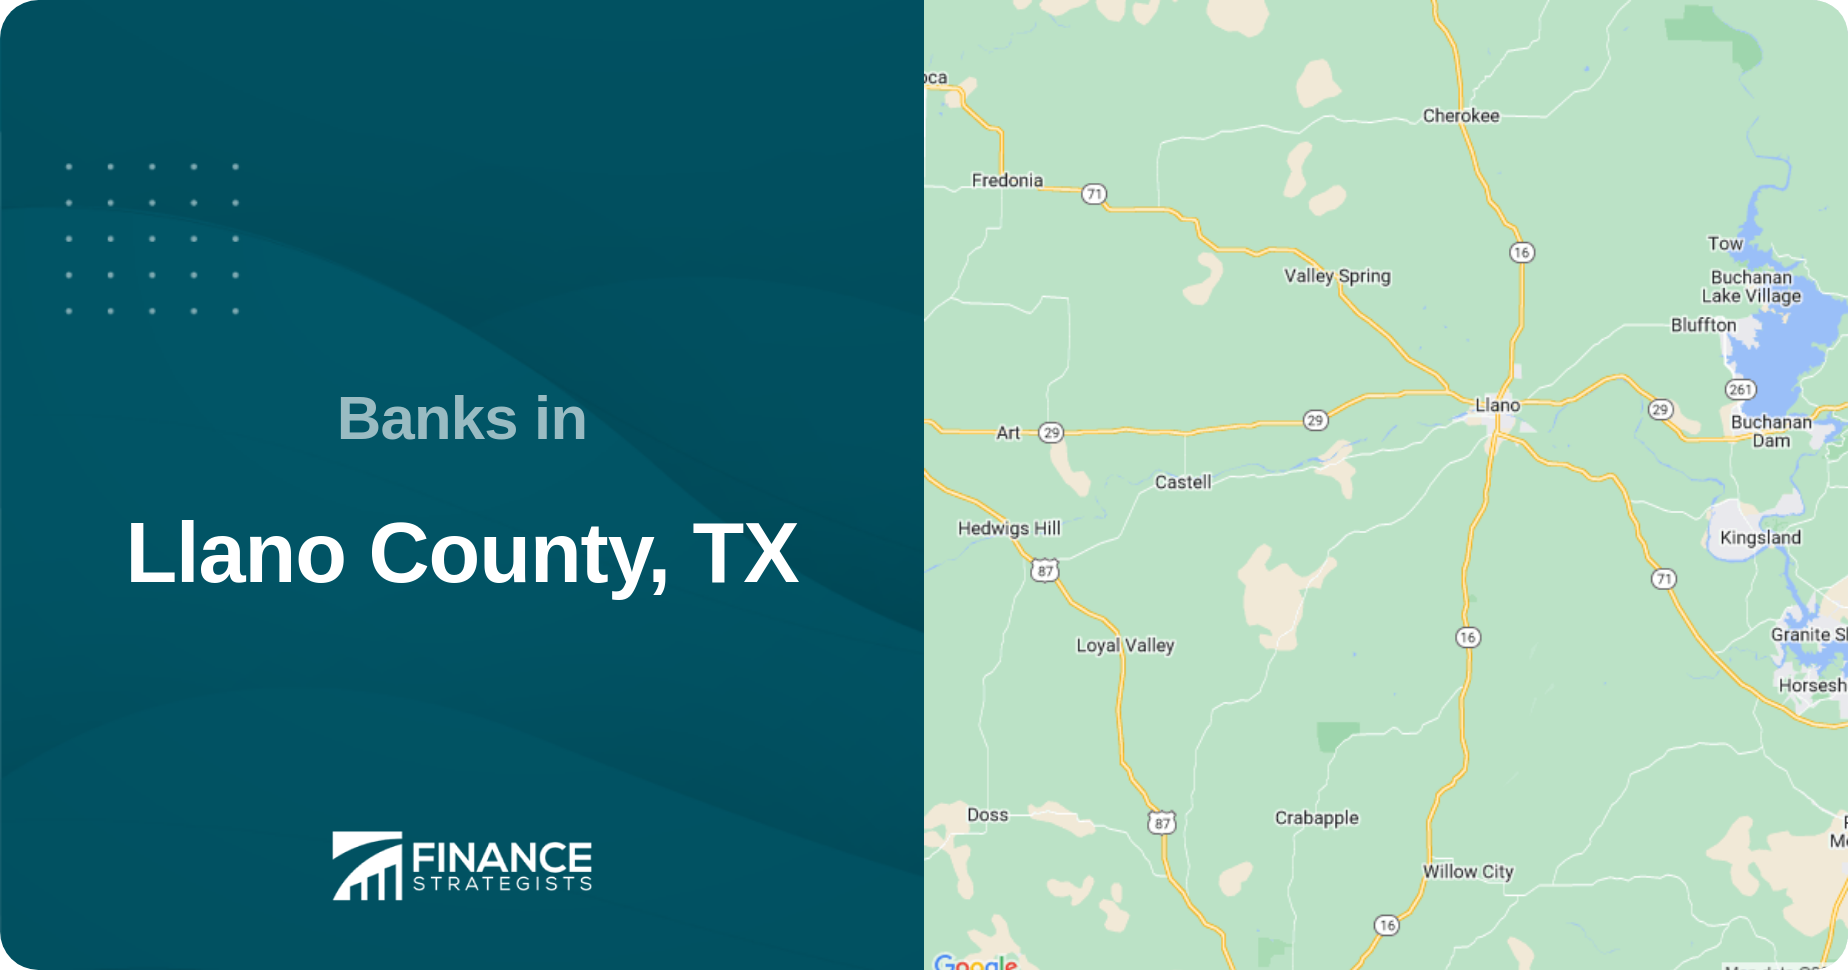 Banks in Llano County, TX